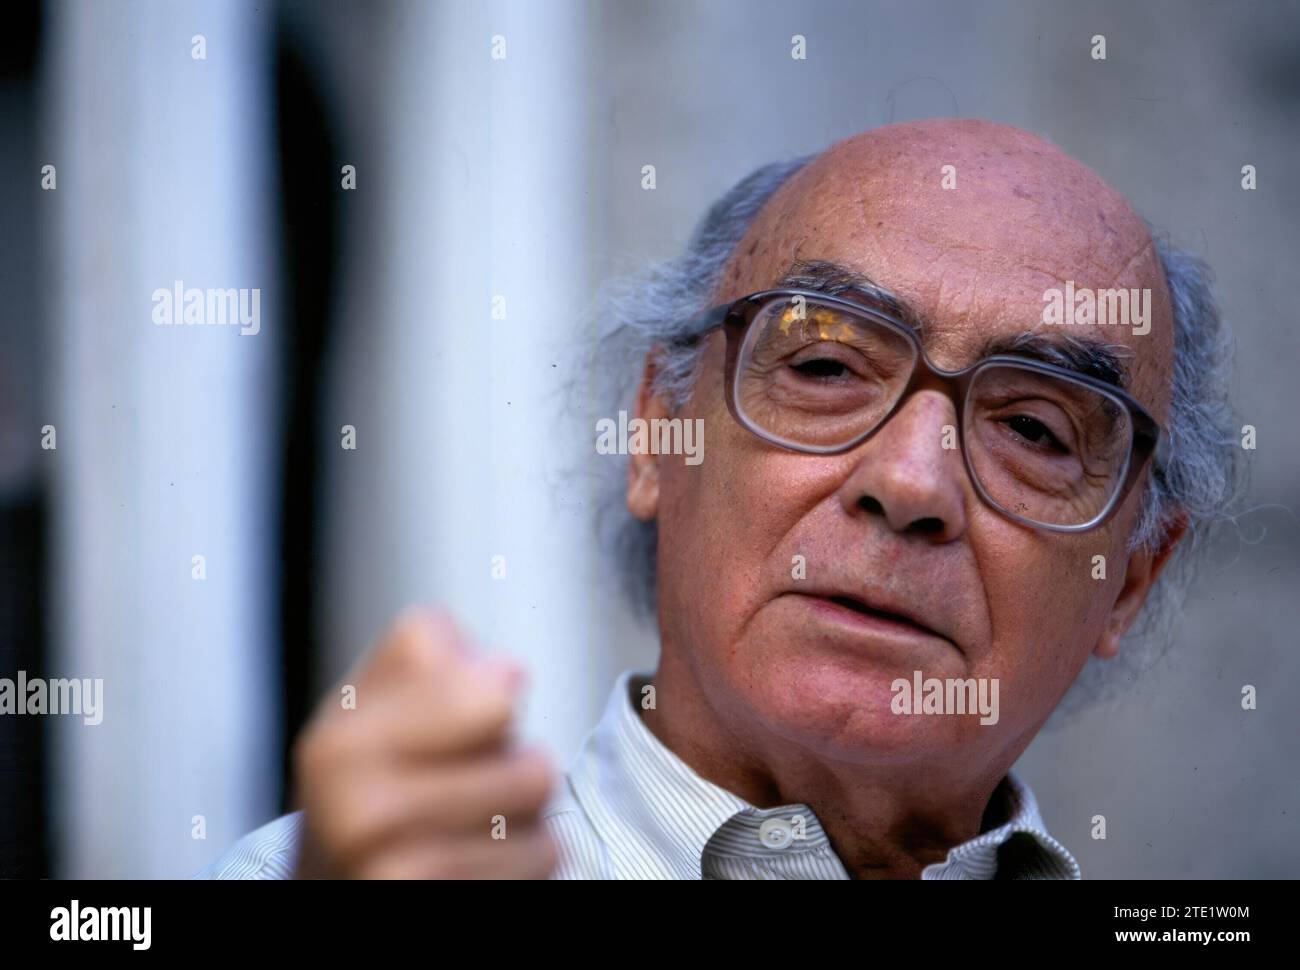 Portuguese writer jose saramago hi-res stock photography and images - Alamy